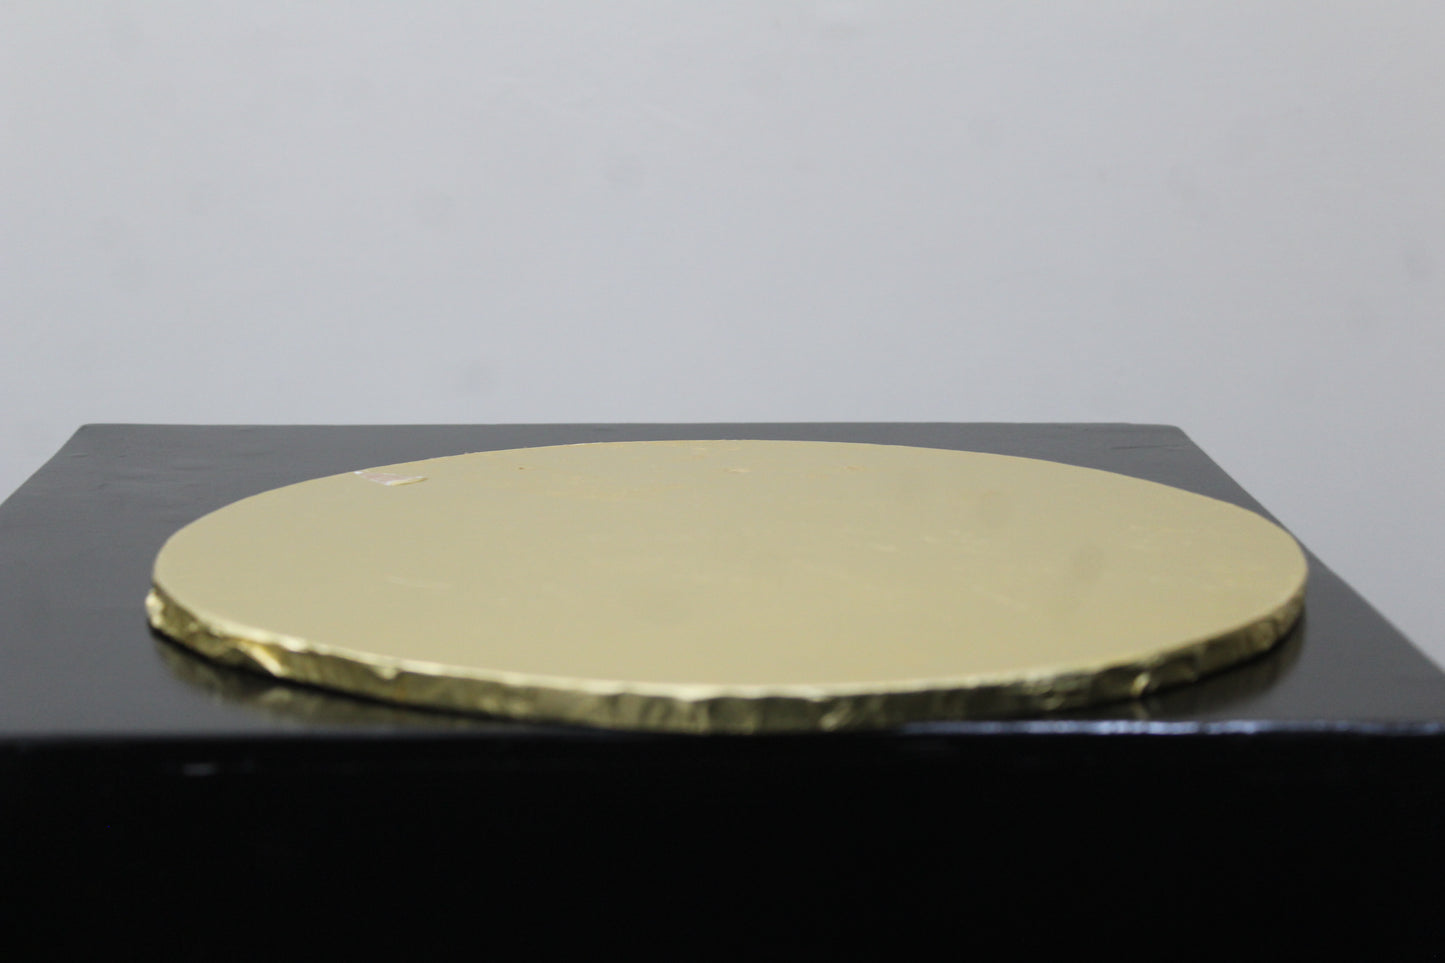 7 inch Cake Drum Board - White/Black/Golden/Silver